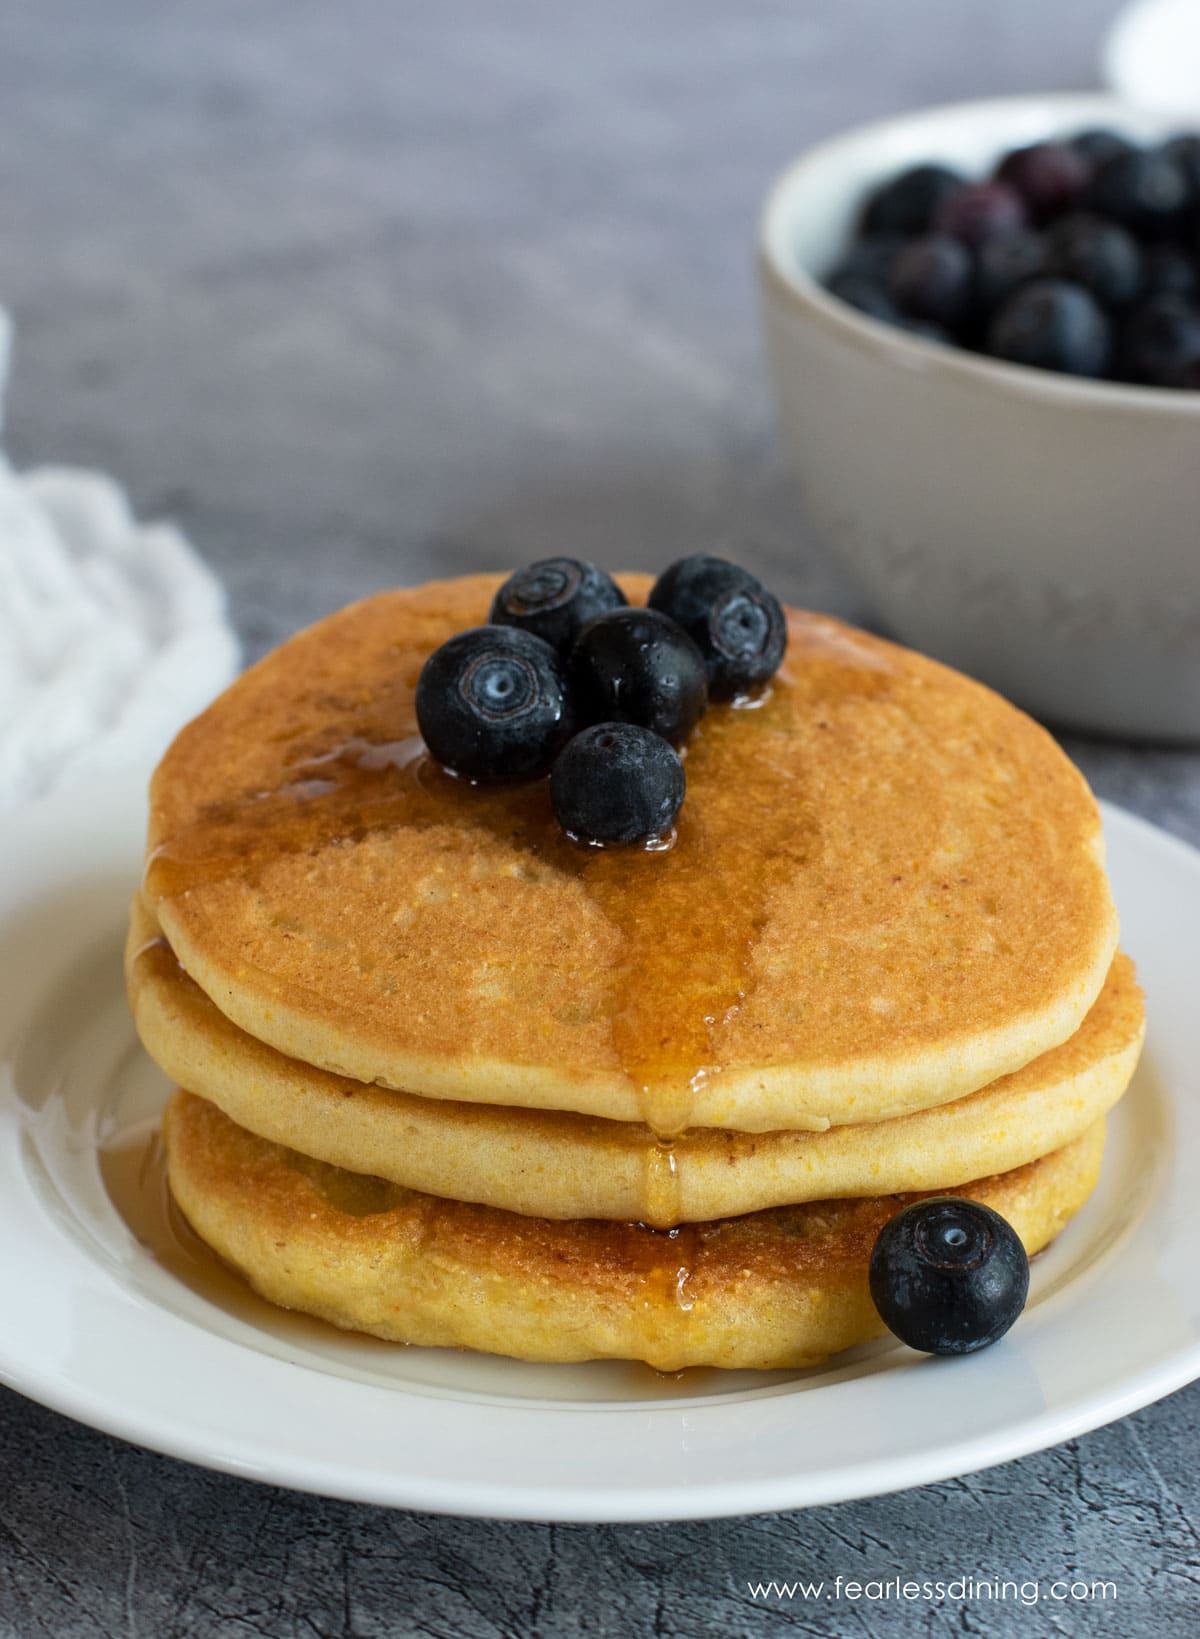 Gluten free cornmeal pancake stack with syrup.